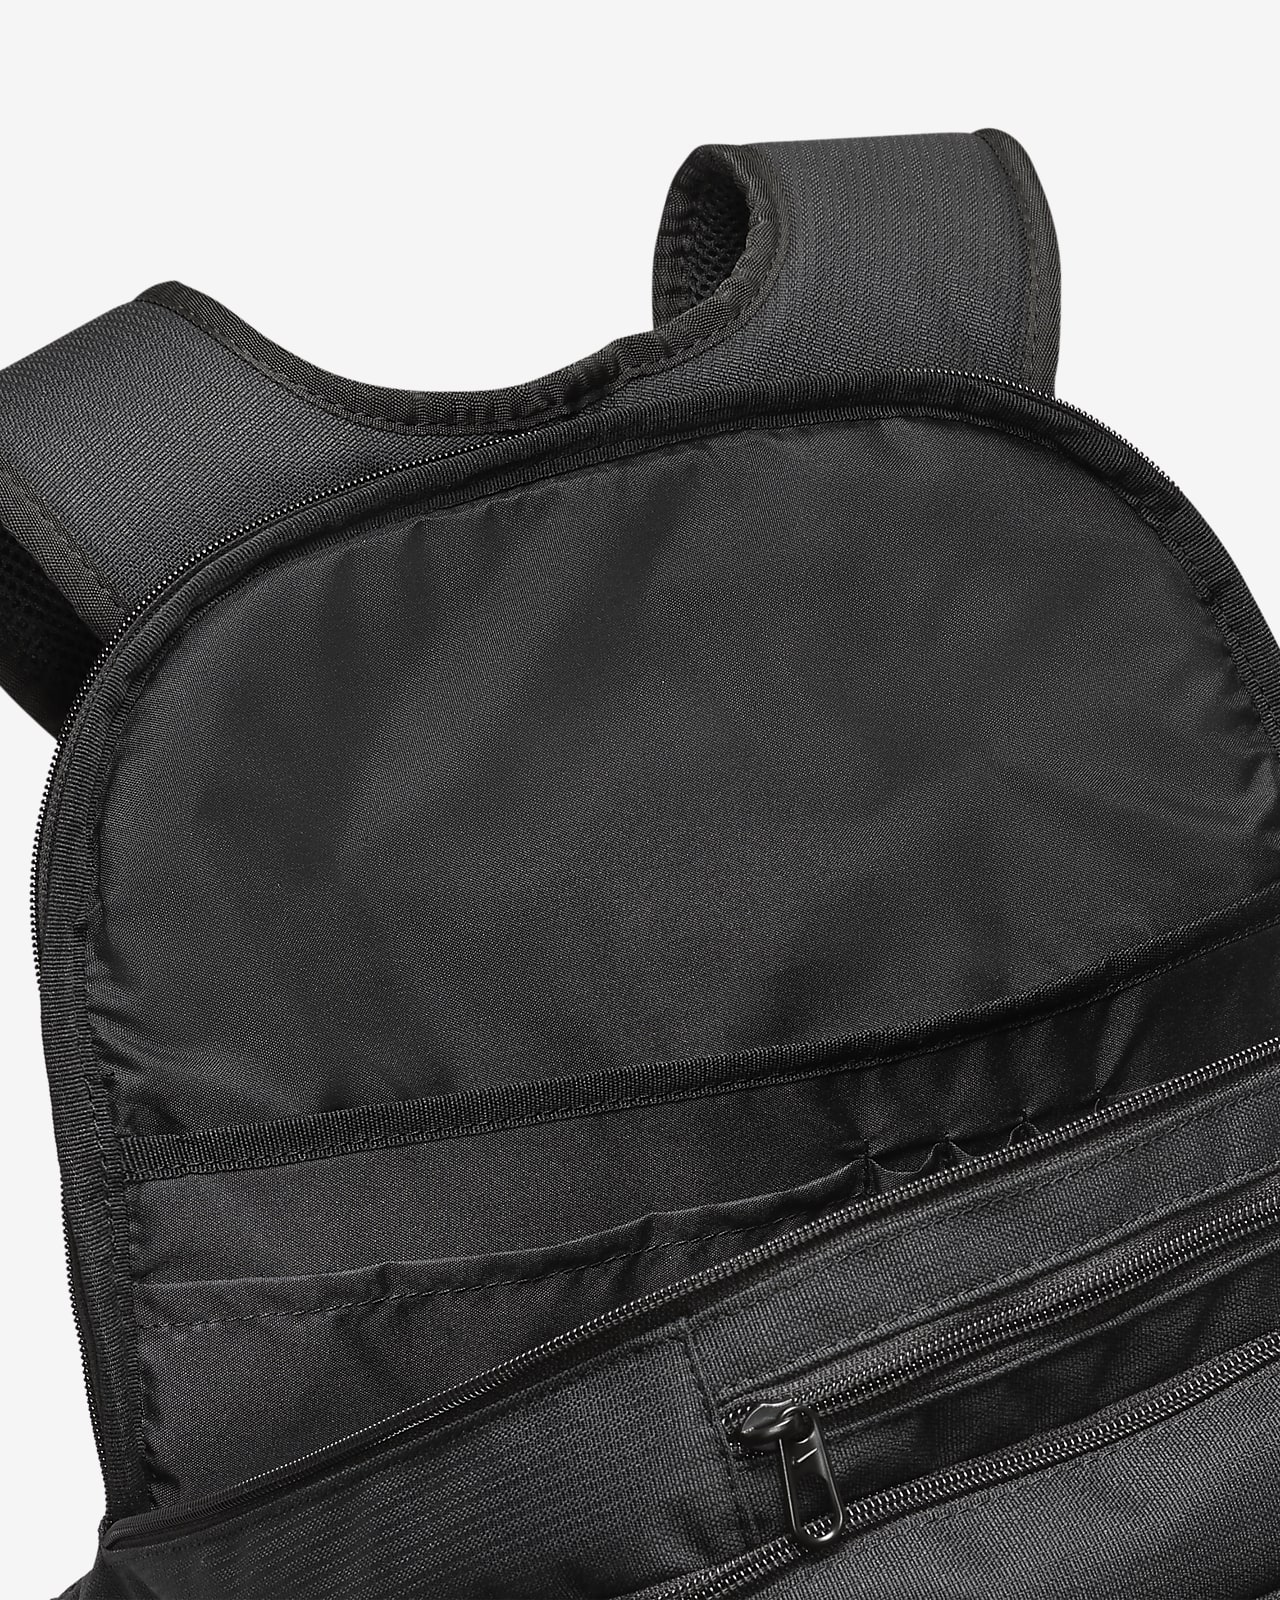 Nike Brasilia 9.5 24L Backpack Black